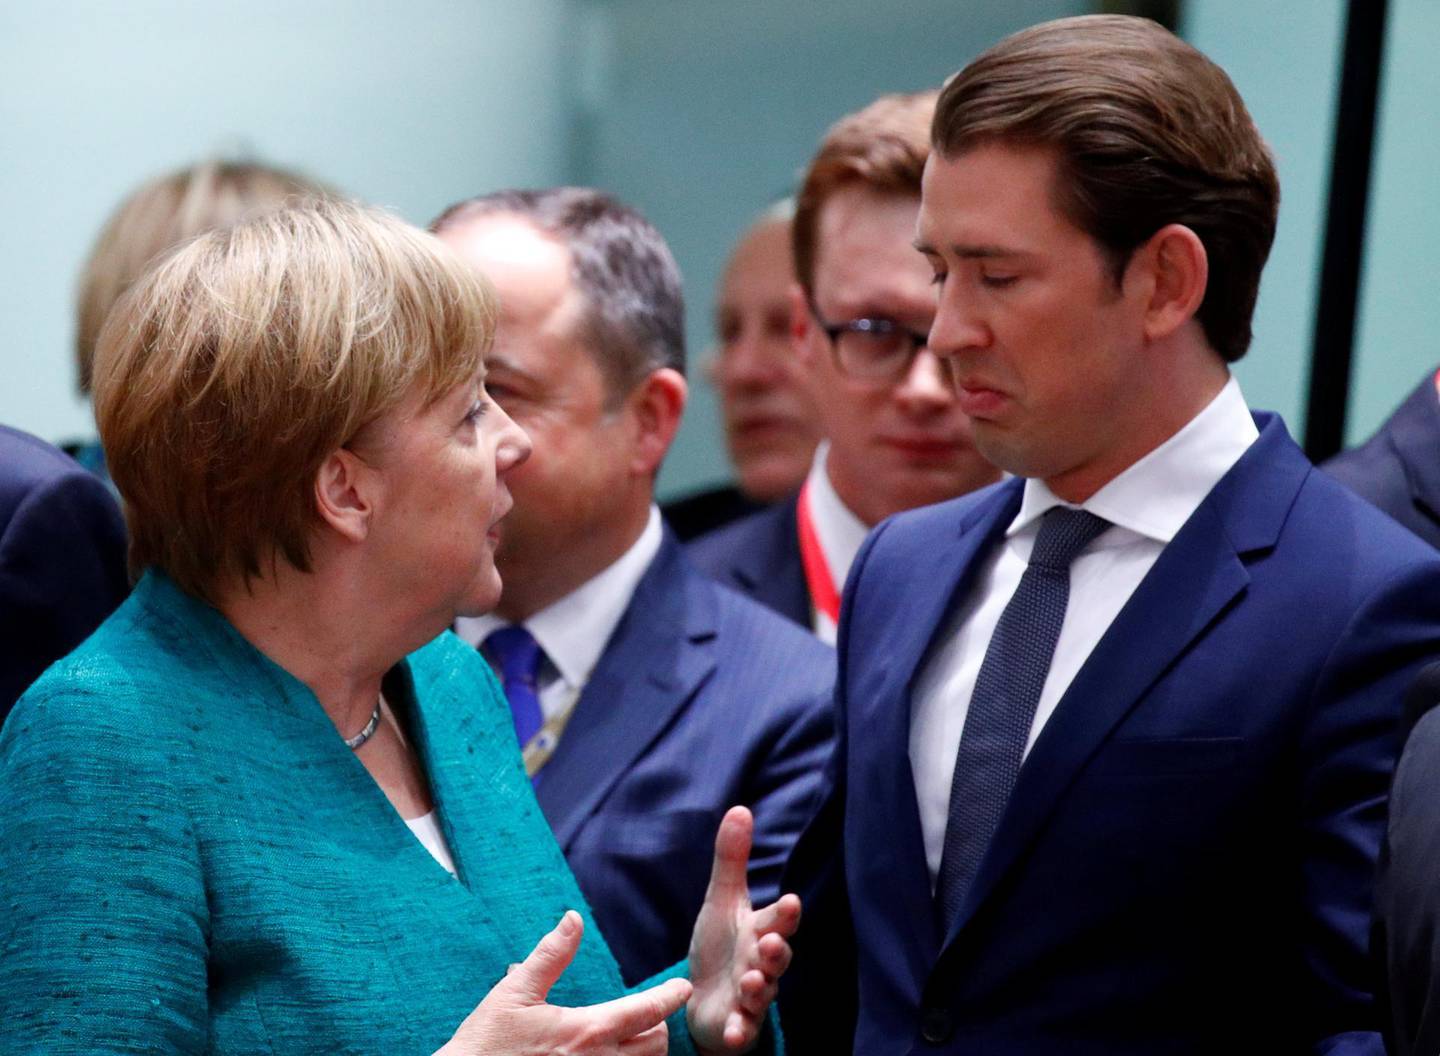 REFILE - CORRECTING ID German Chancellor Angela Merkel talks with Austrian Chancellor Sebastian Kurz as they attend an European Union leaders summit in Brussels, Belgium, June 28, 2018. REUTERS/Francois Lenoir